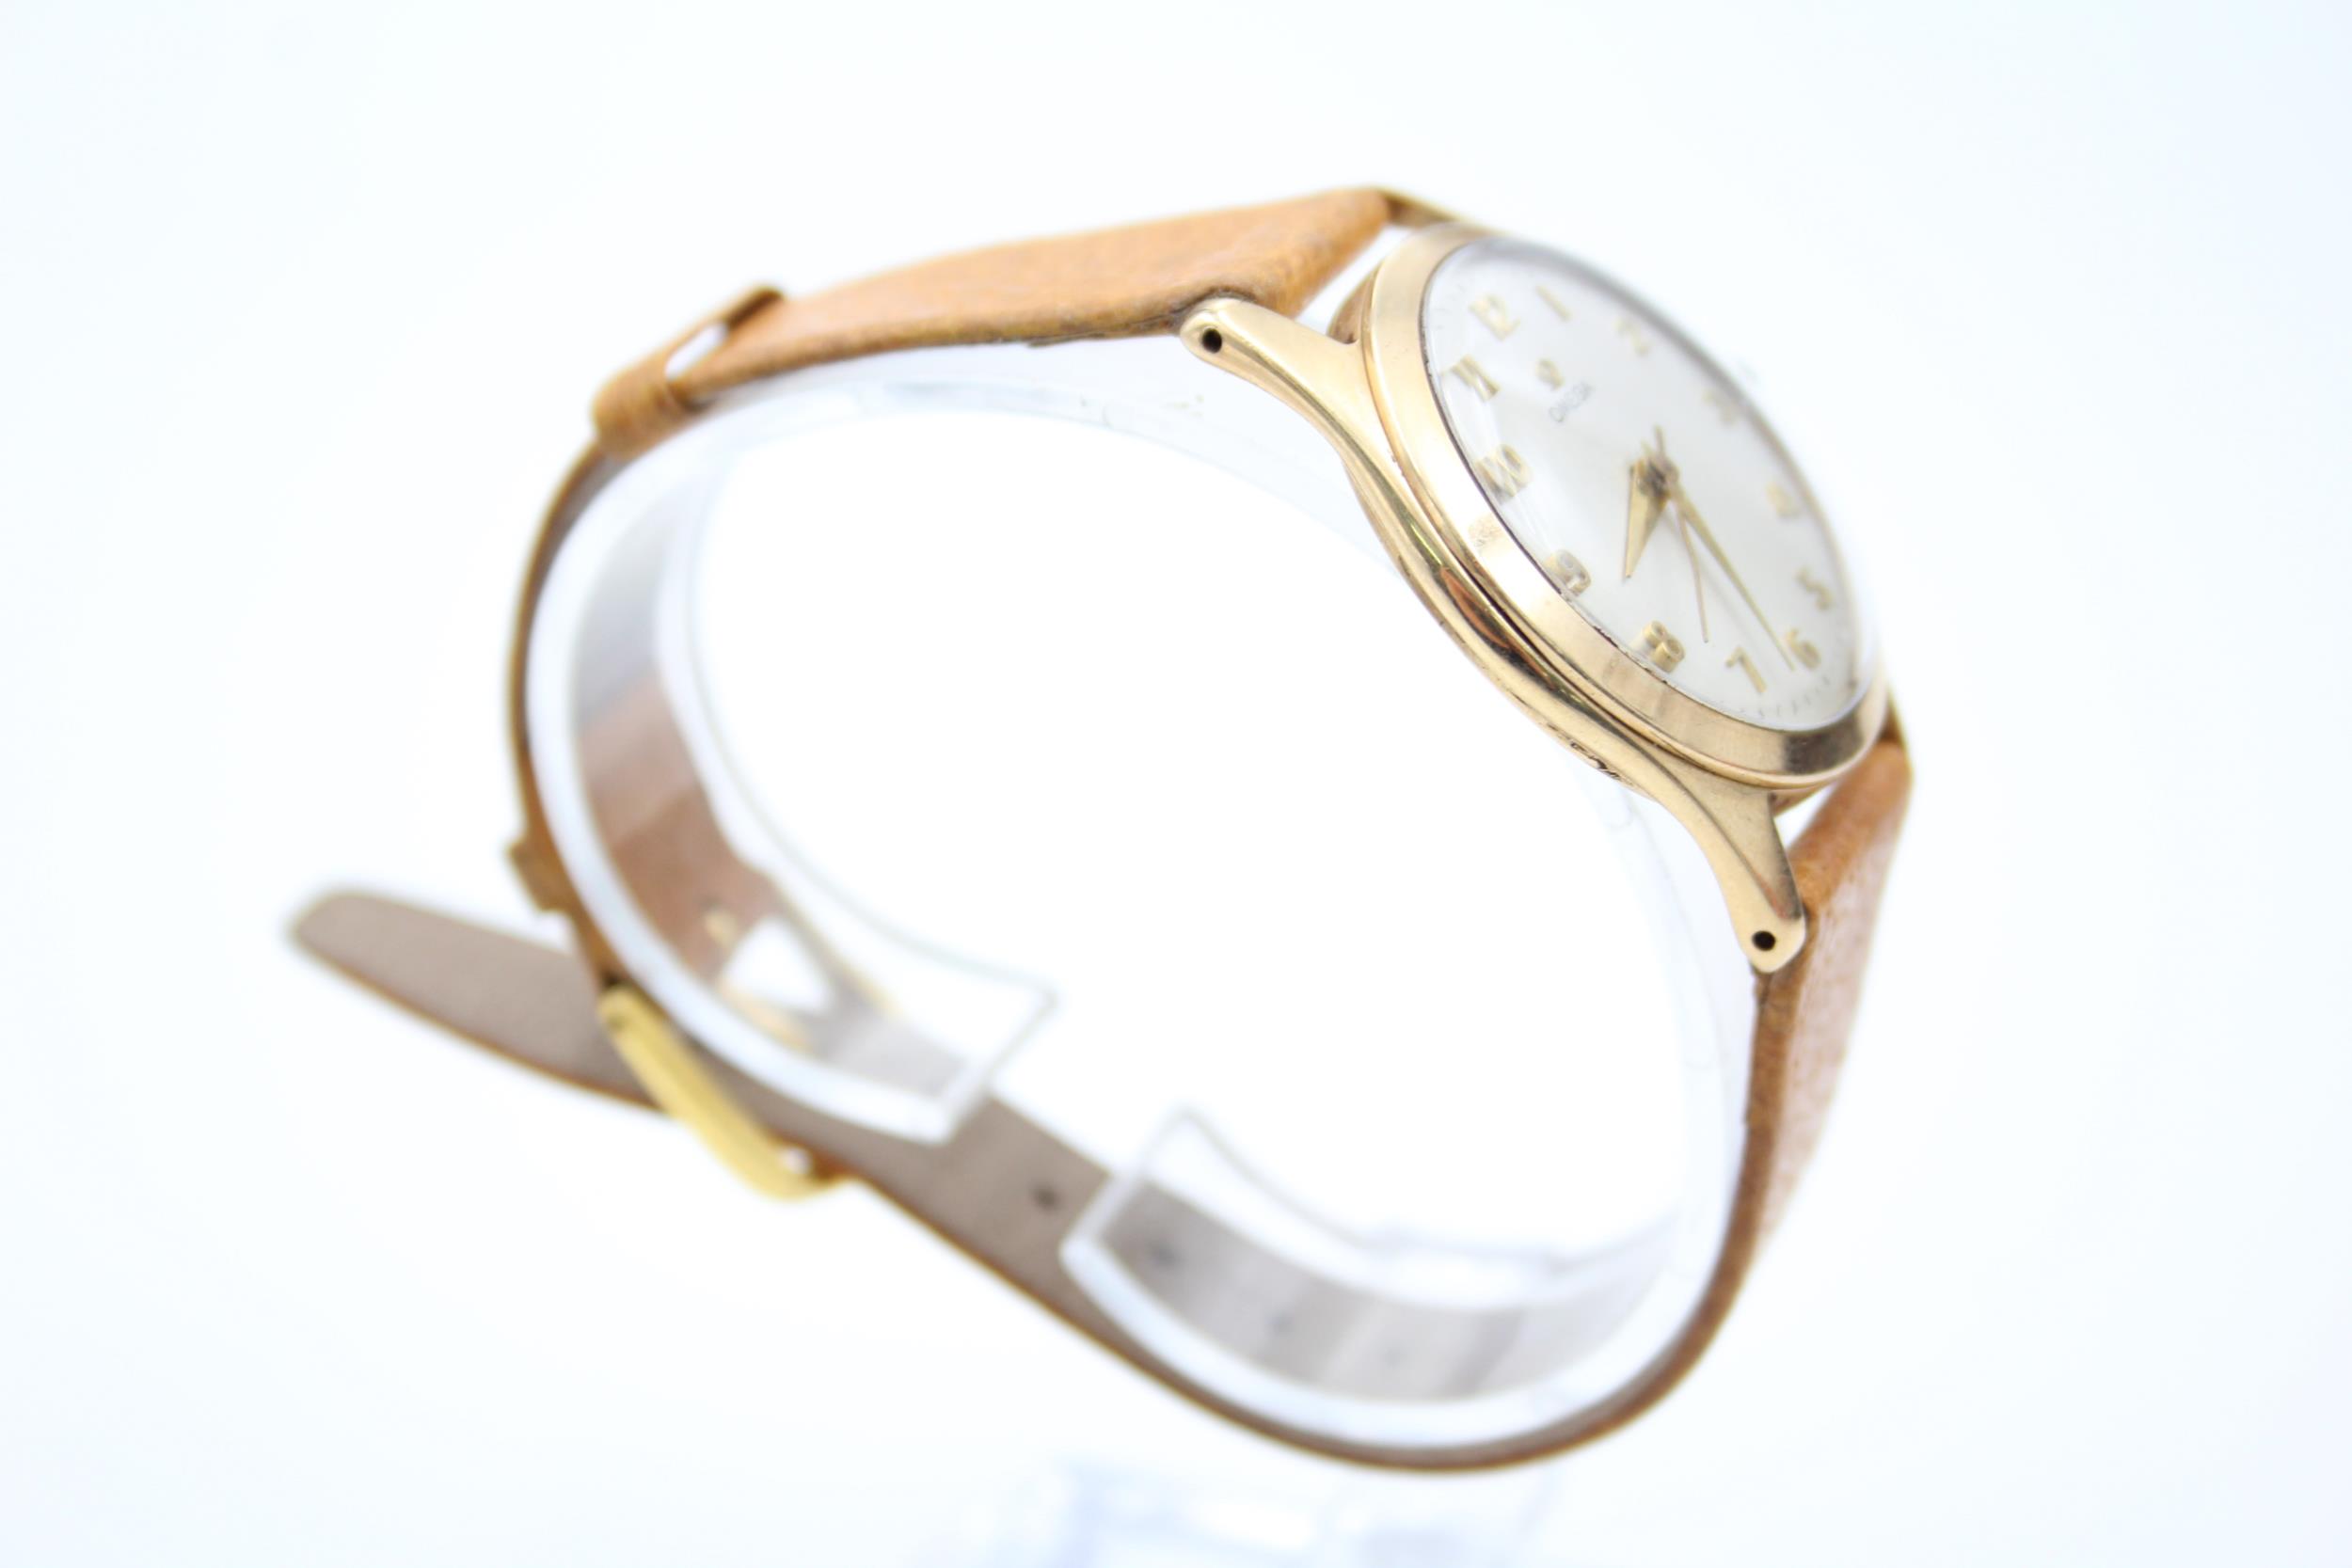 Vintage Gents OMEGA 9ct gold Wristwatch Handwind WORKING // Vintage OMEGA 9ct Gold Wristwatch - Image 5 of 6